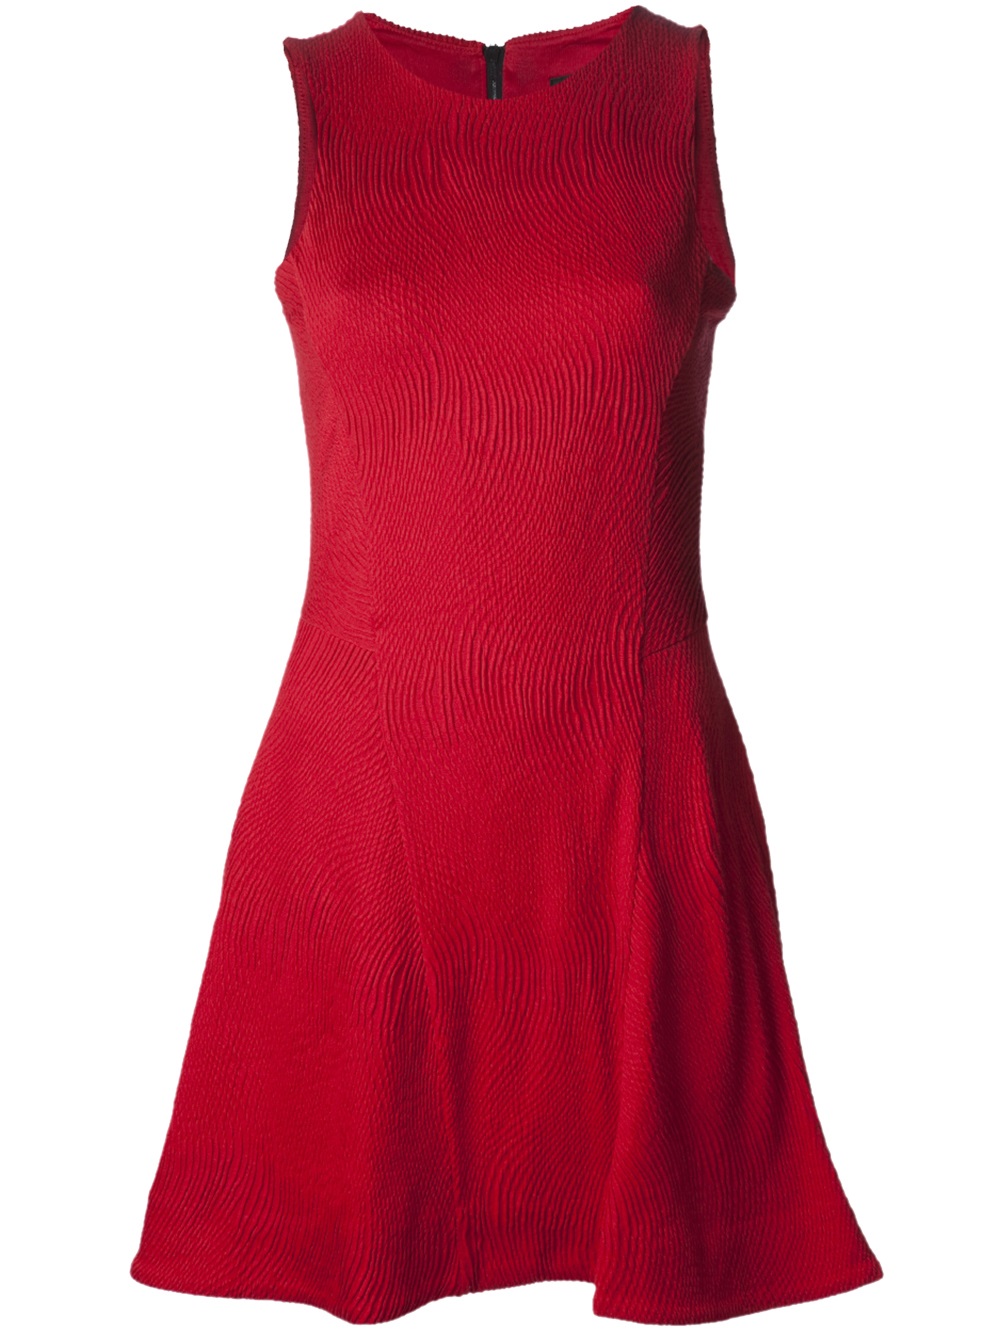 Lyst - Rag & Bone Geneva Dart Waist Dress in Red